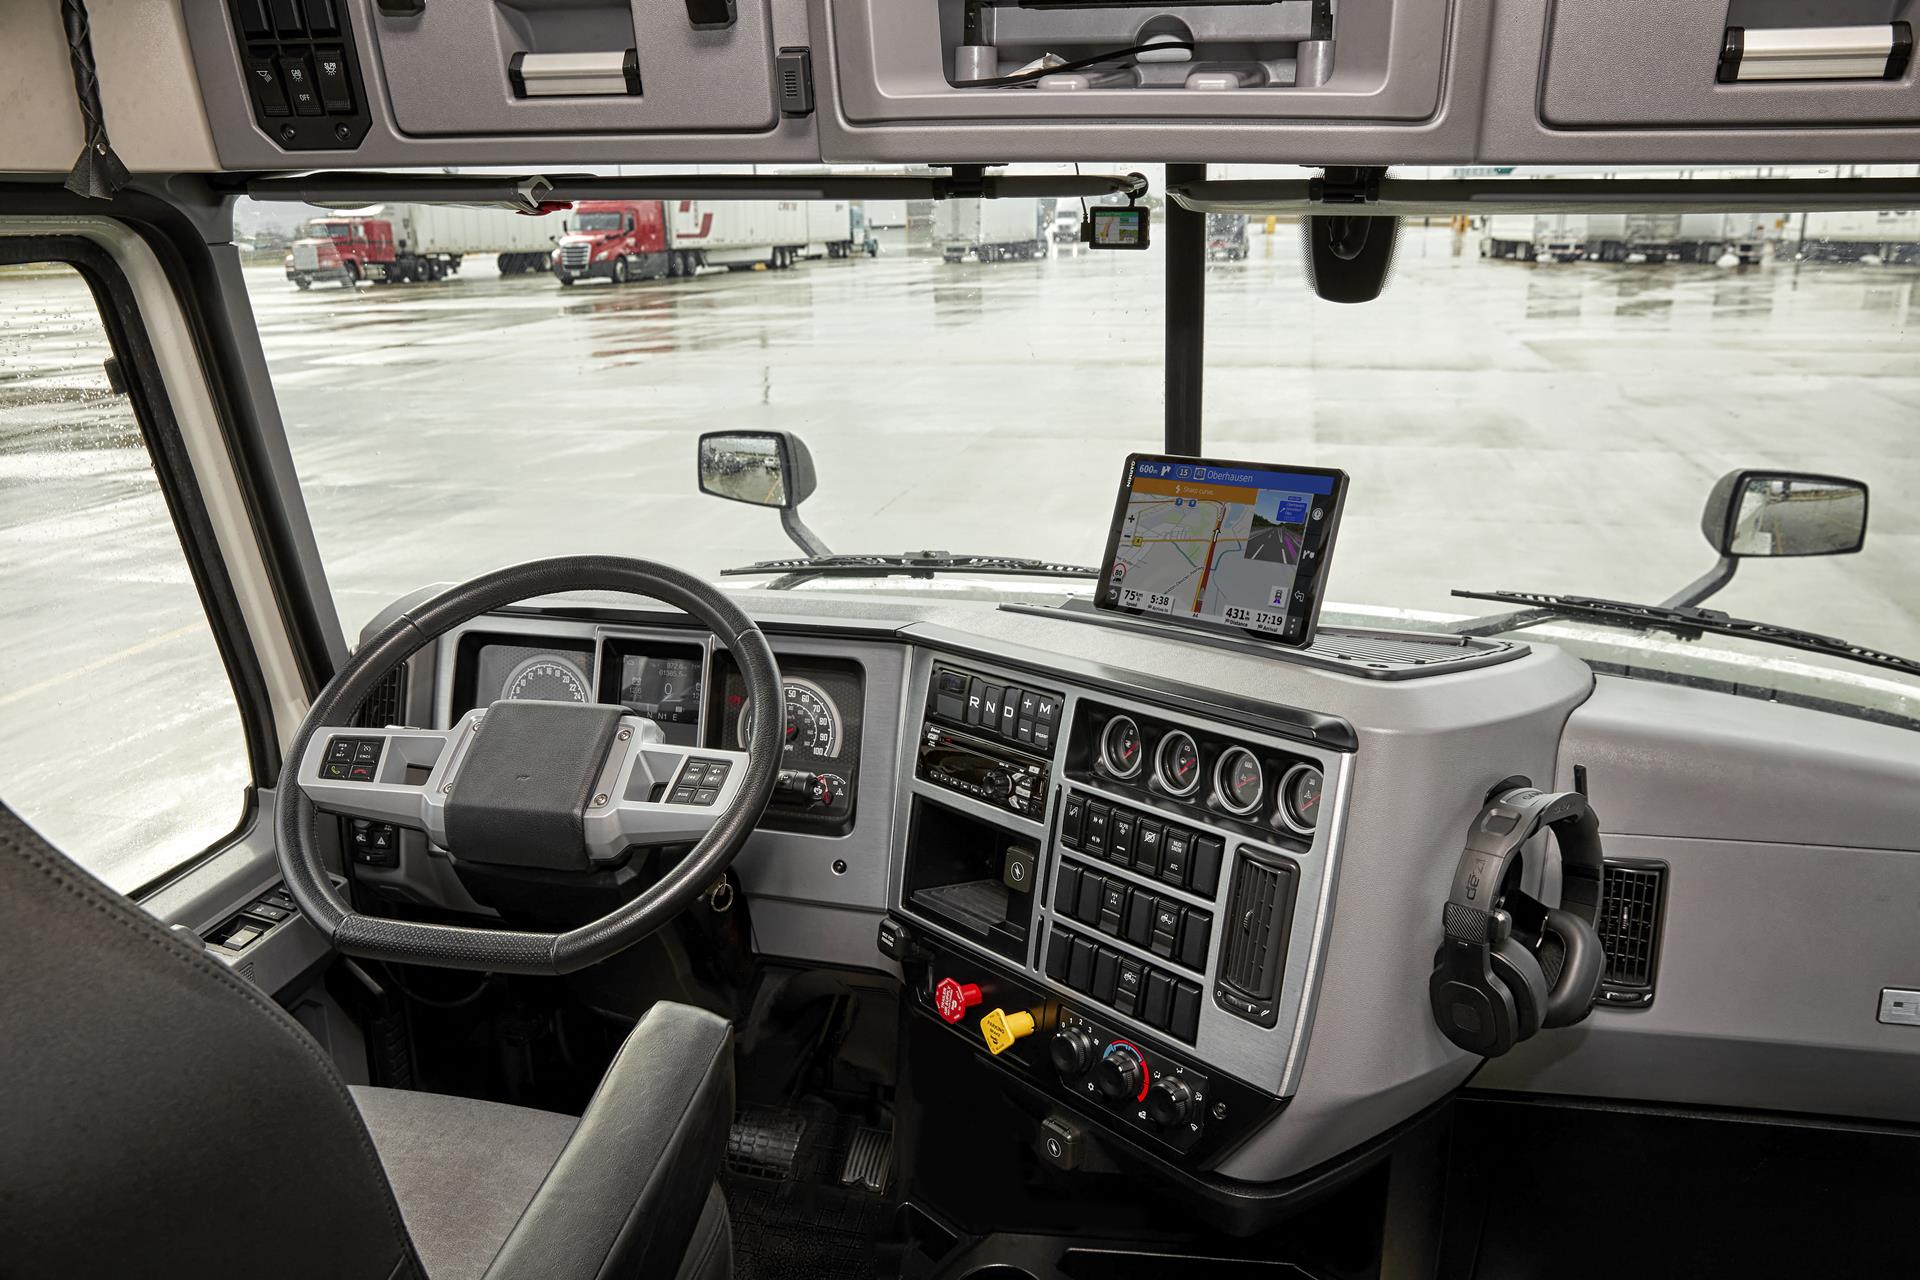 Garmin dēzl LGV710 7" Truck Satellite Navigation with Digital Traffic